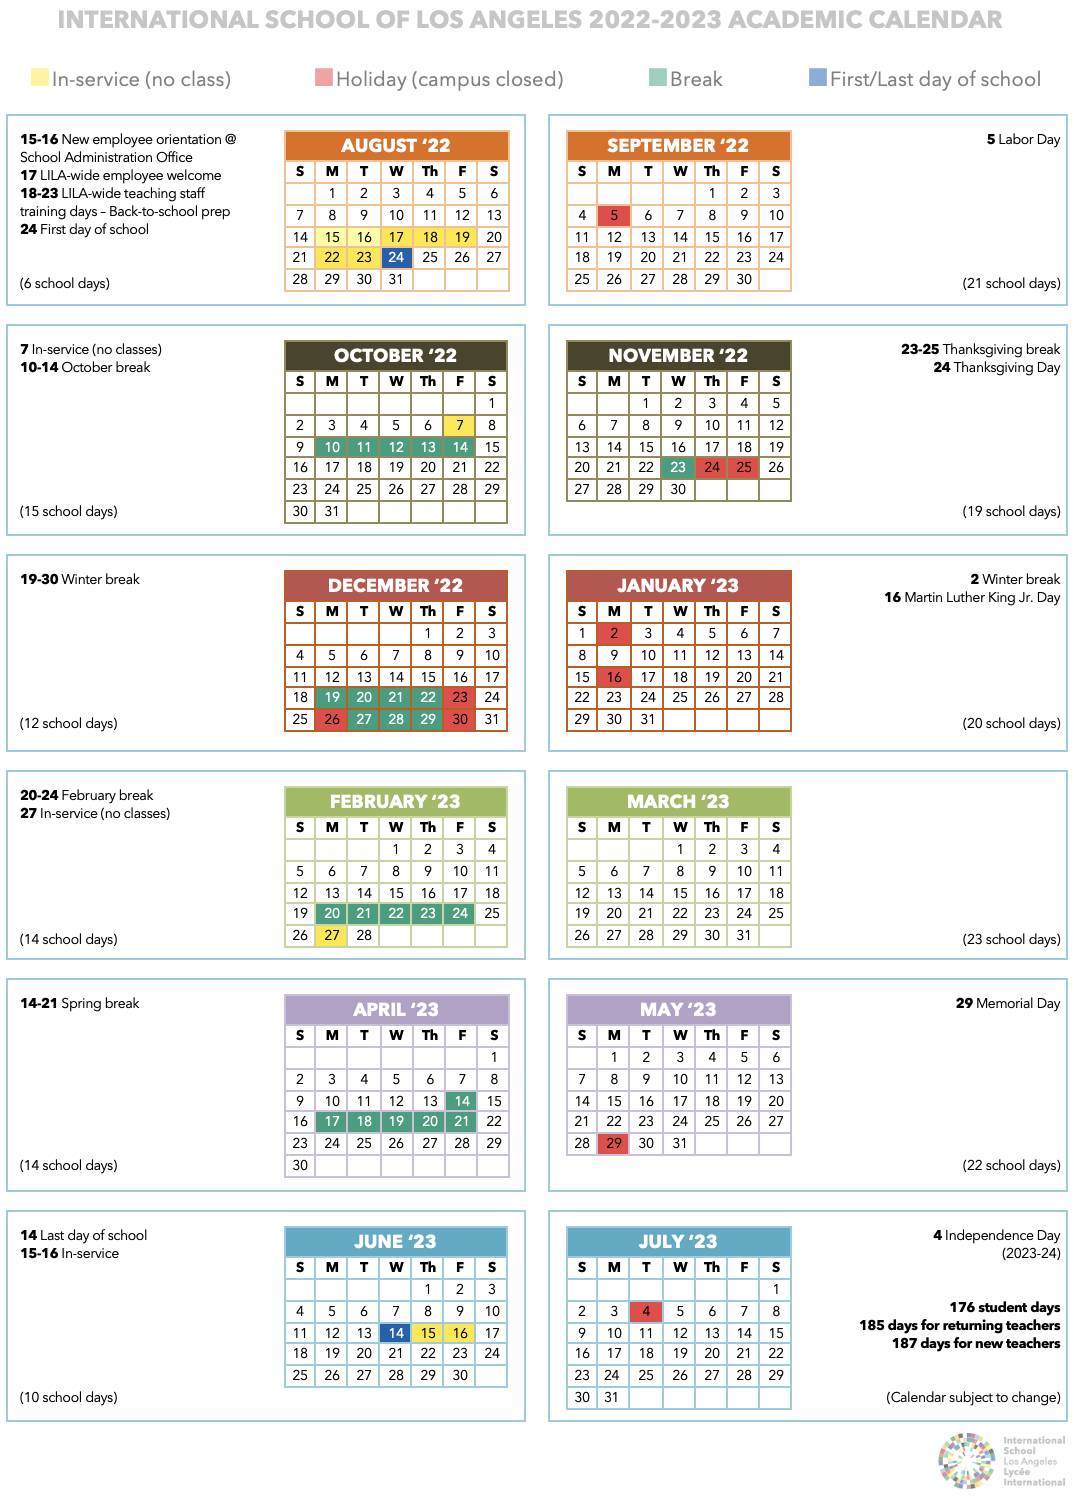 Ucla 2022 2023 Academic Calendar Calendar | International School Of Los Angeles